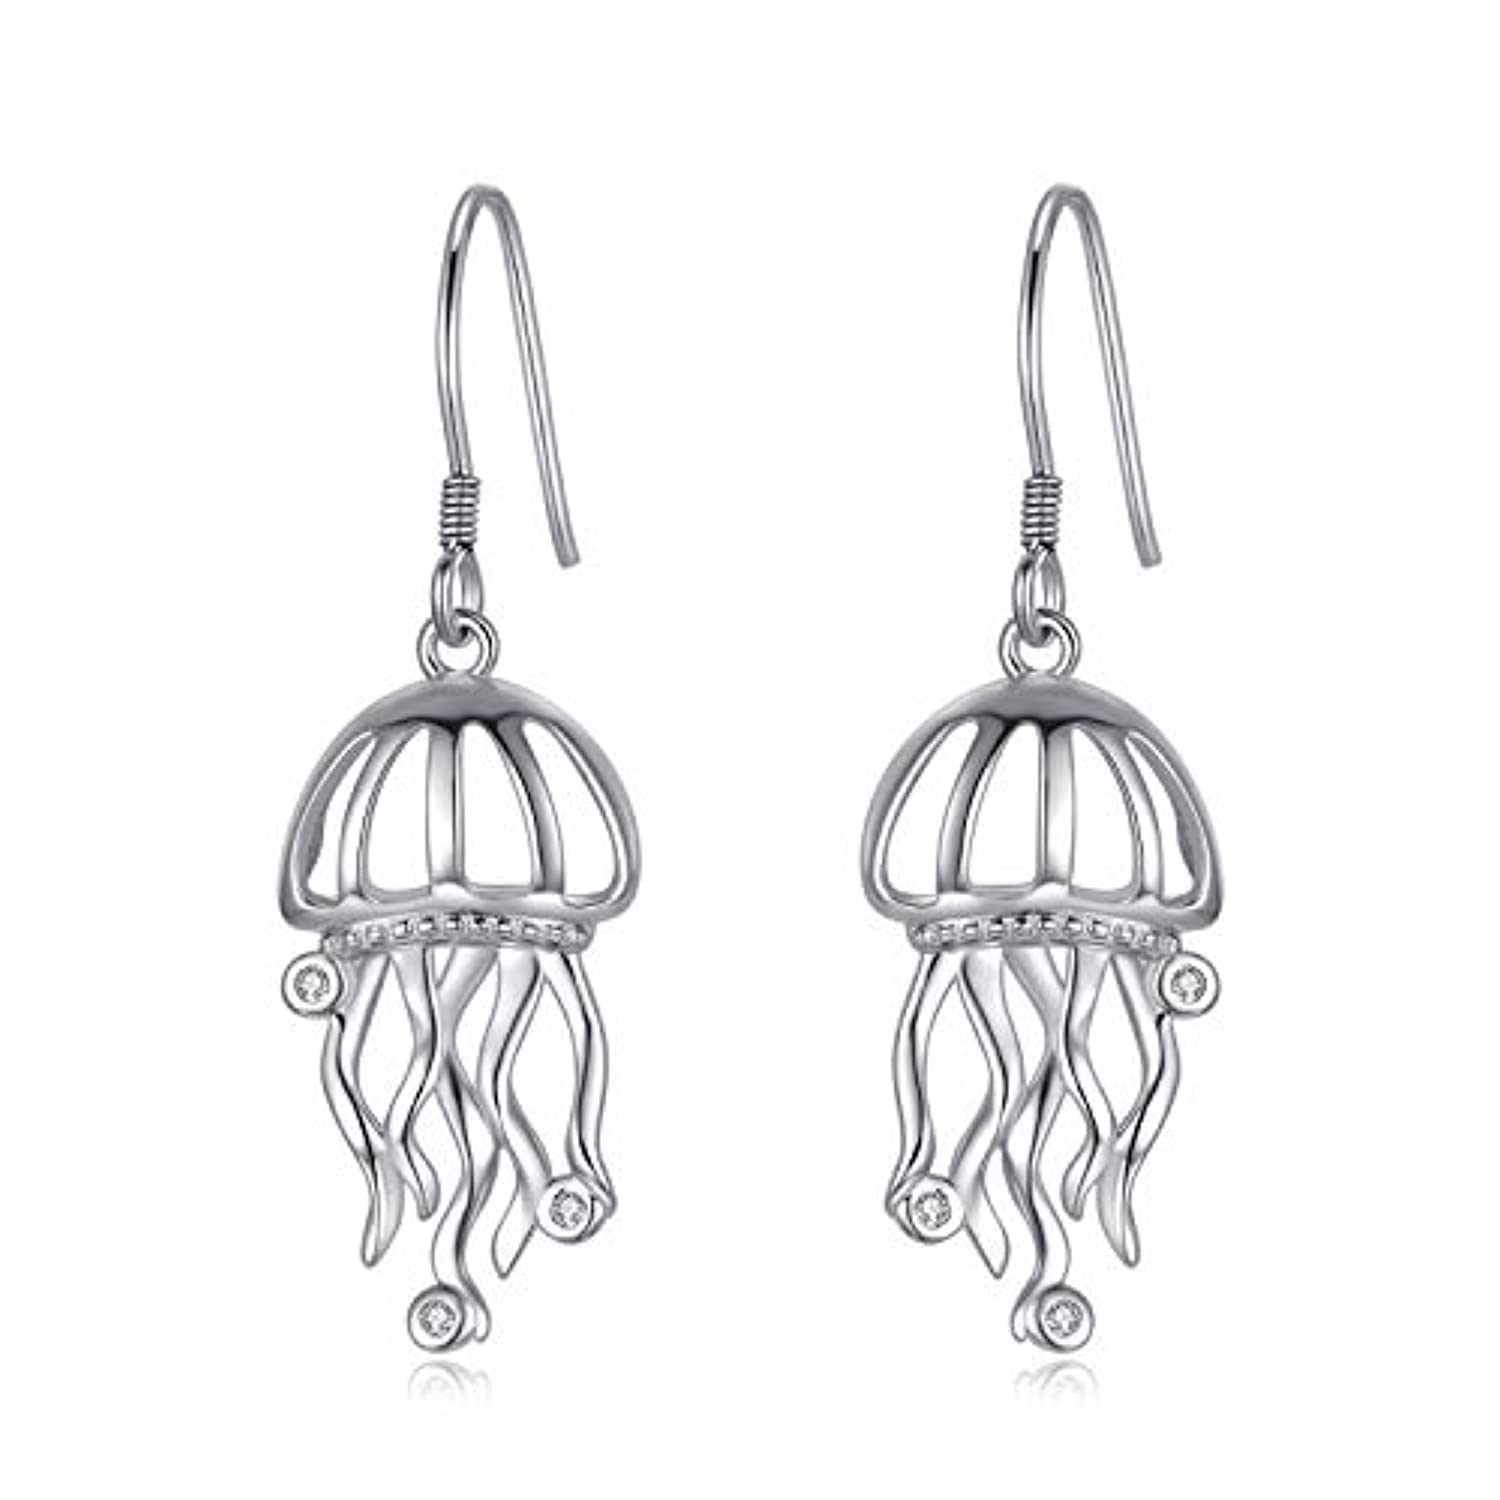 Nautical jellyfish earrings, beaded jellyfish jewelry